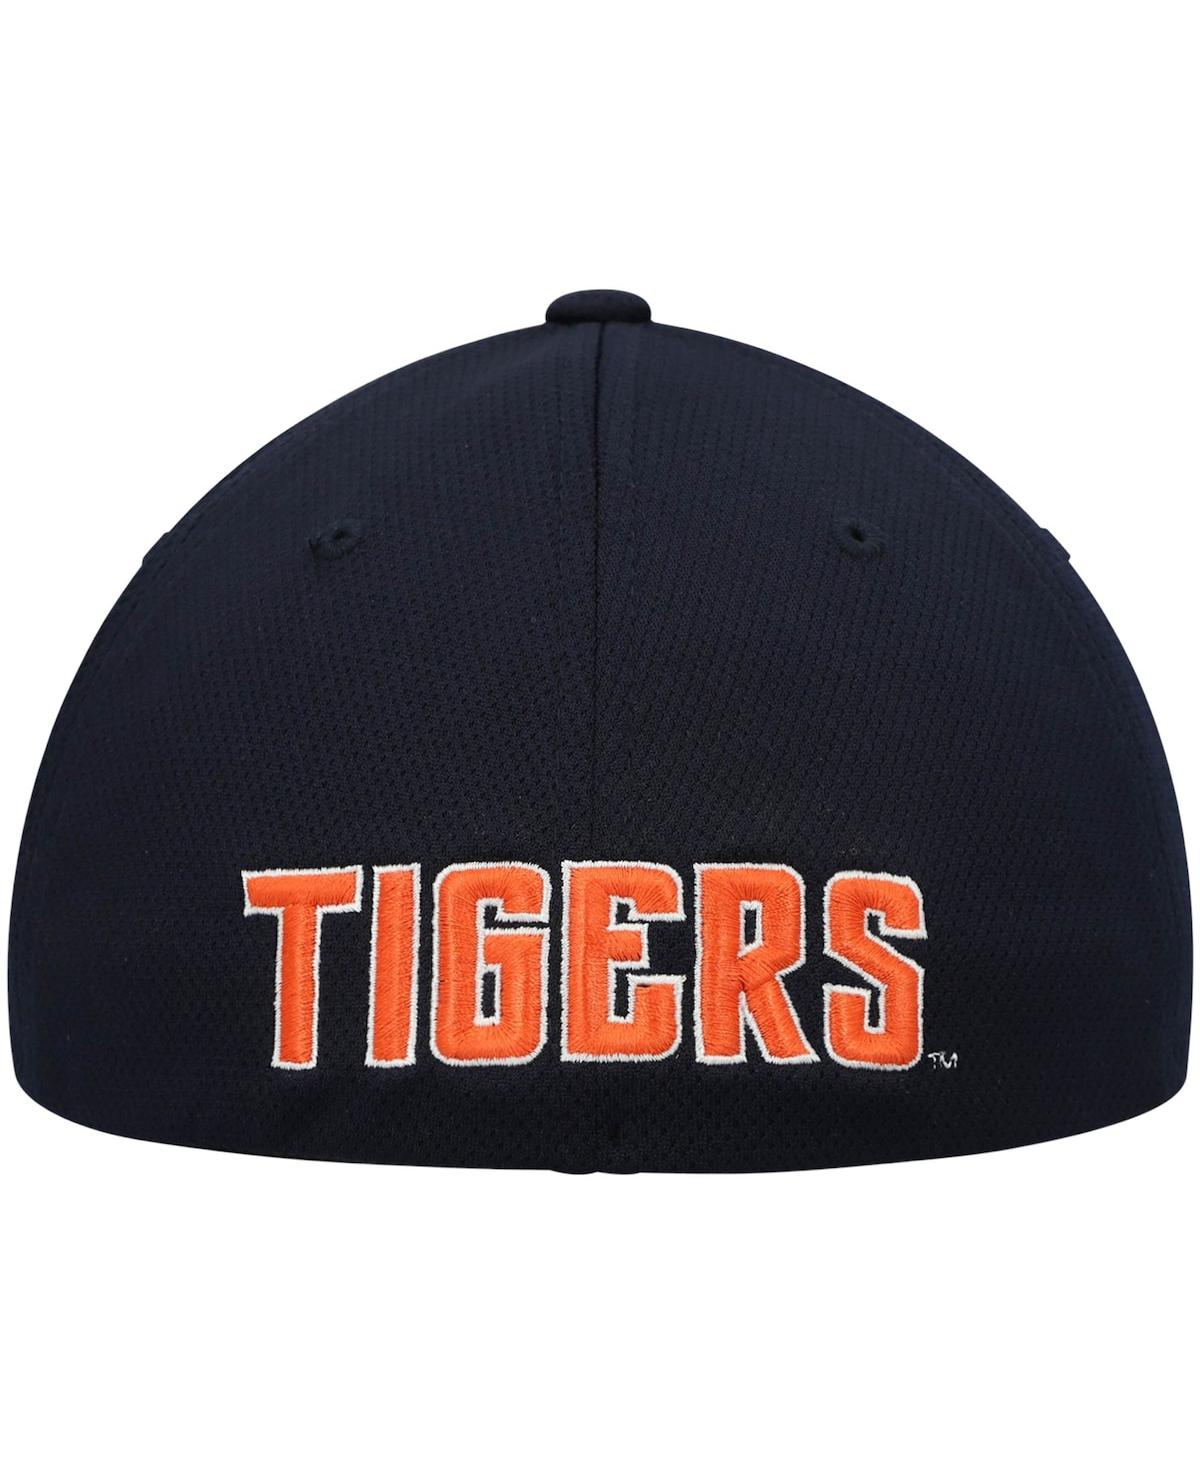 Shop Top Of The World Men's  Navy Auburn Tigers Reflex Logo Flex Hat